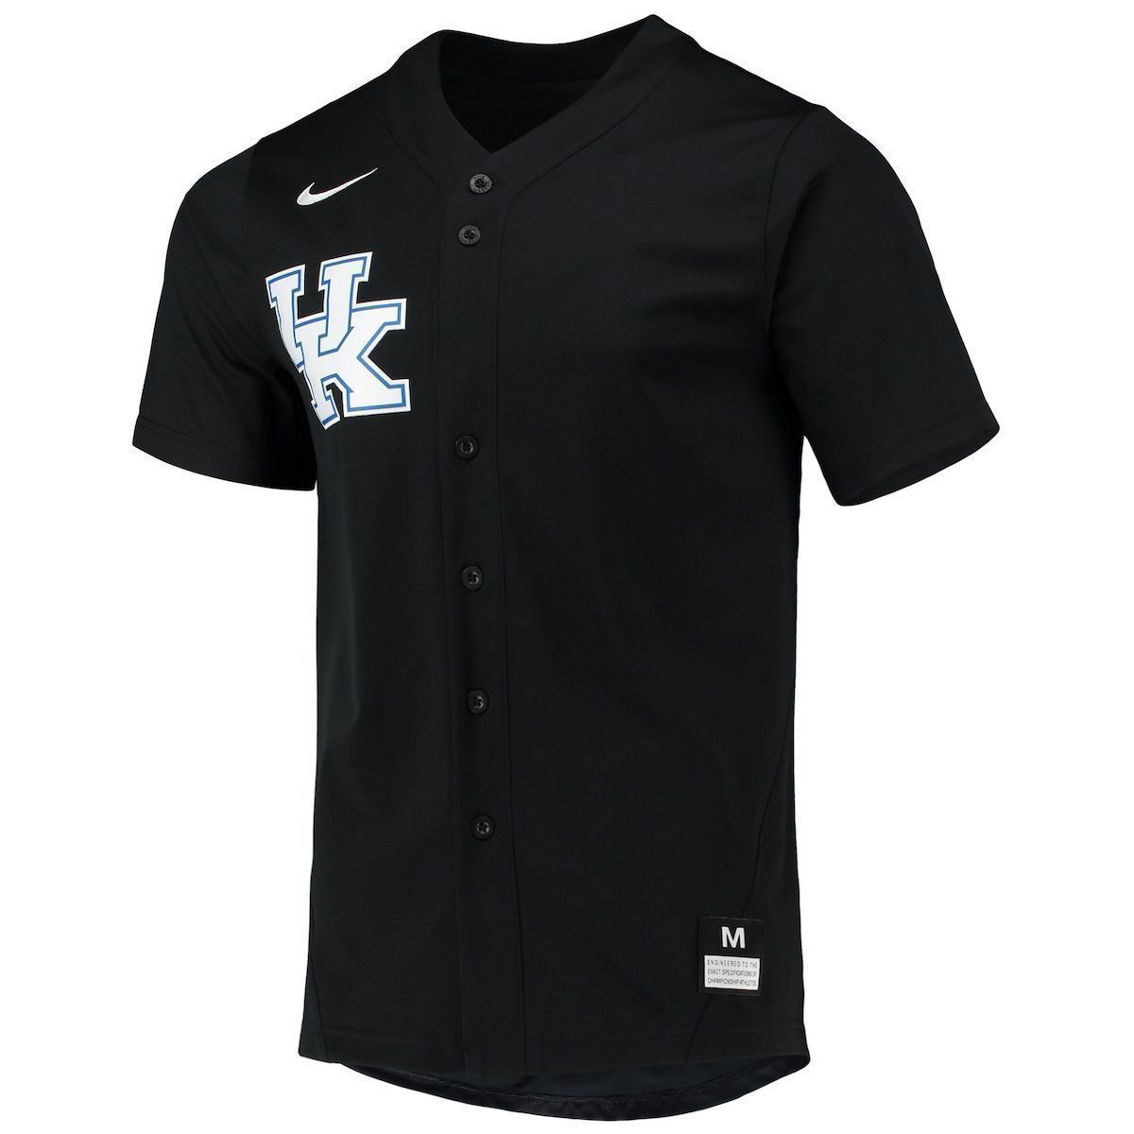 Men's Nike Black Kentucky Wildcats Replica Baseball Jersey - Image 3 of 4